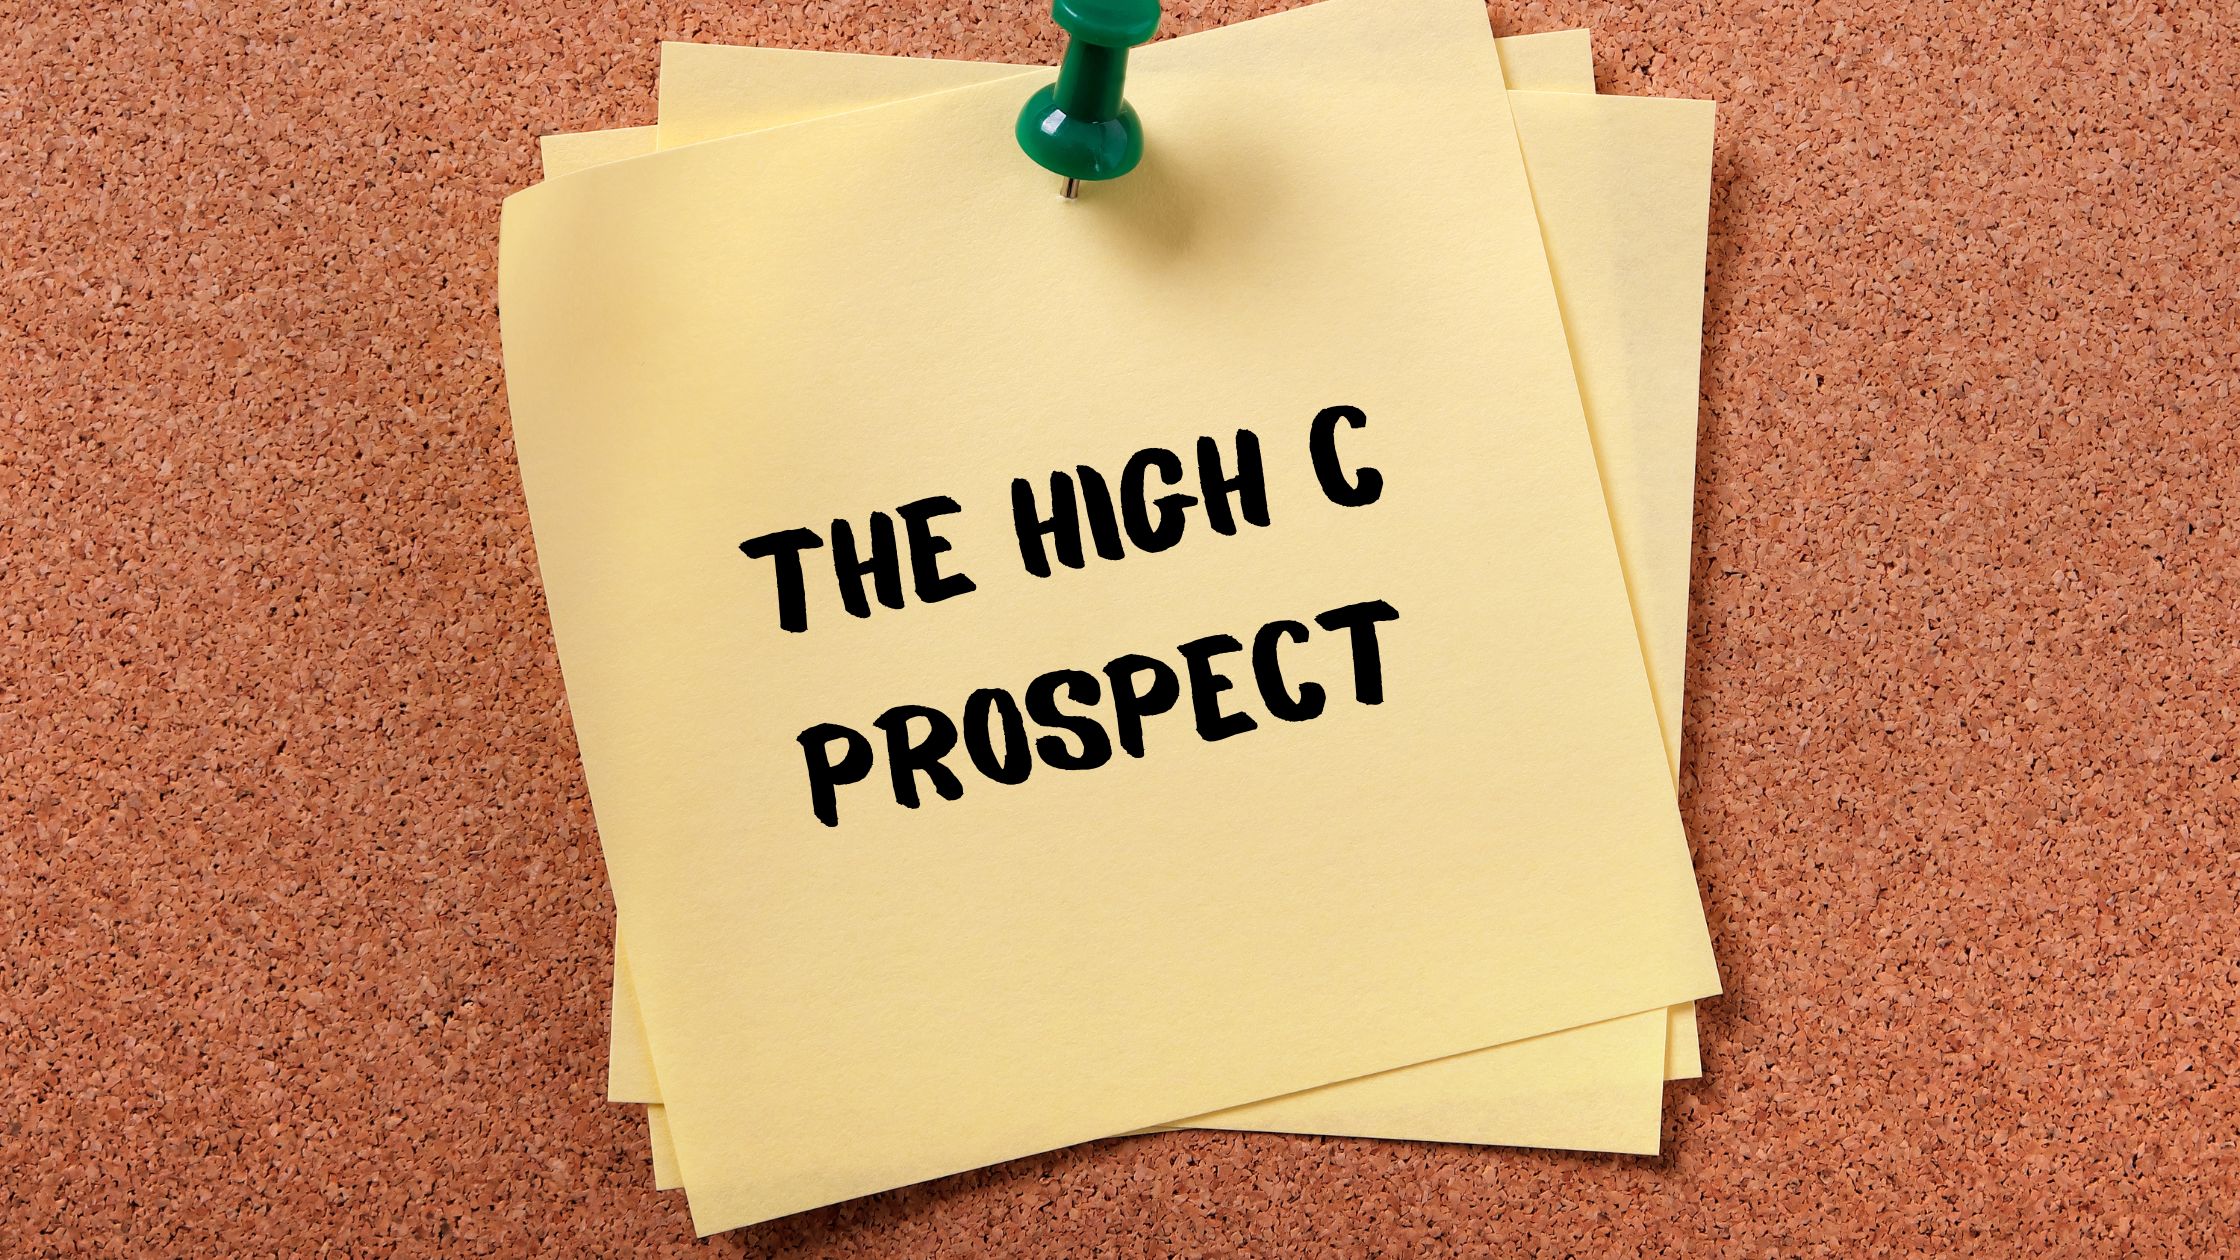 The High c Prospect